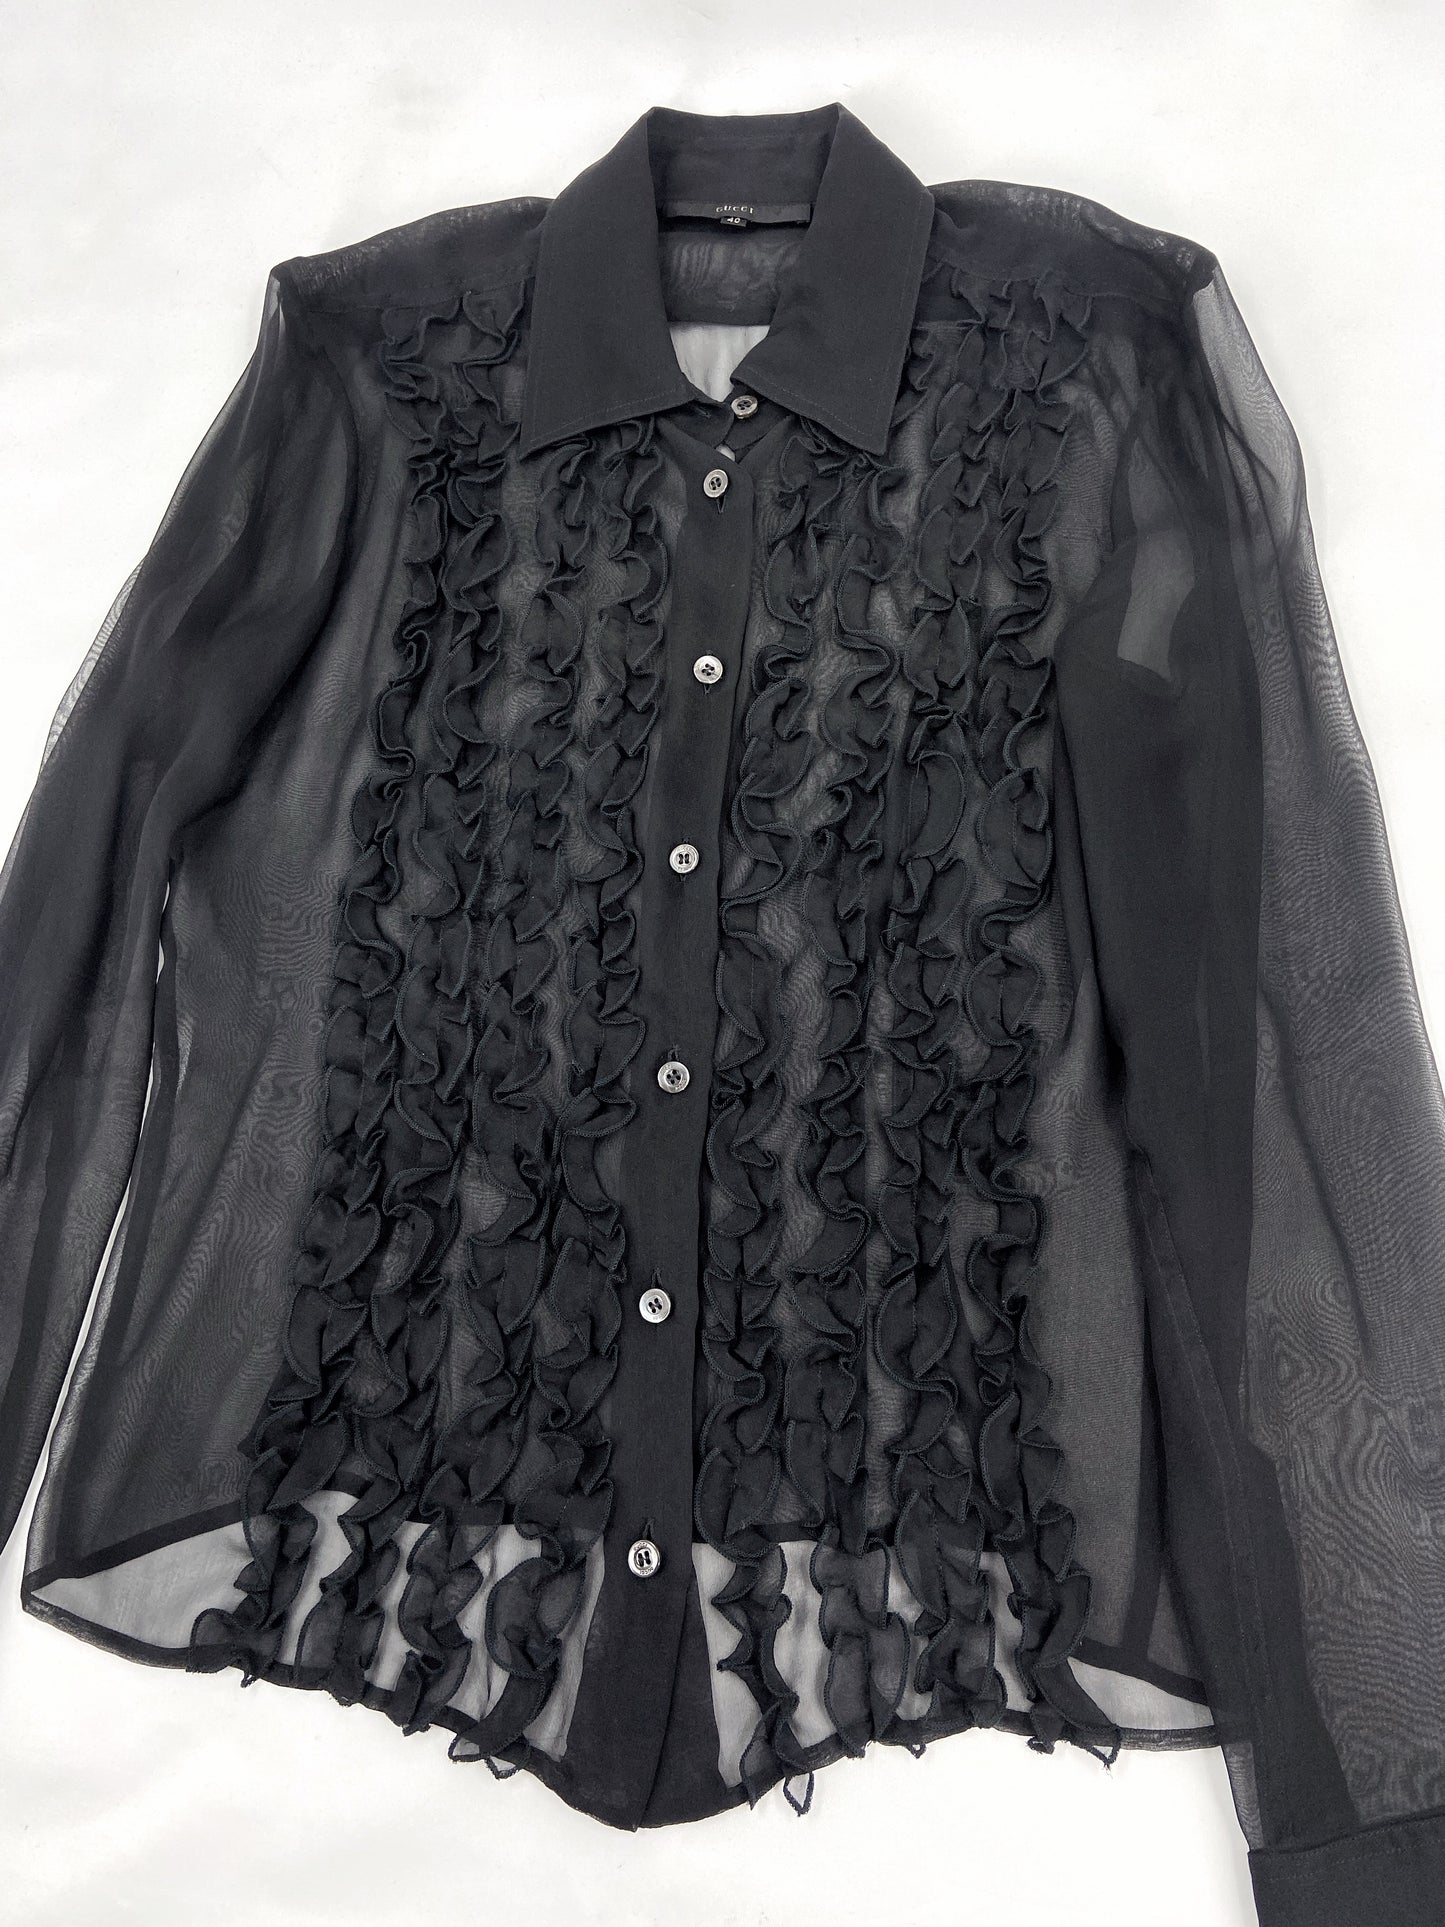 Gucci Spring 1999 Tom Ford Daisey Fuentes Ruffled Silk Sheer Dress Shirt 40